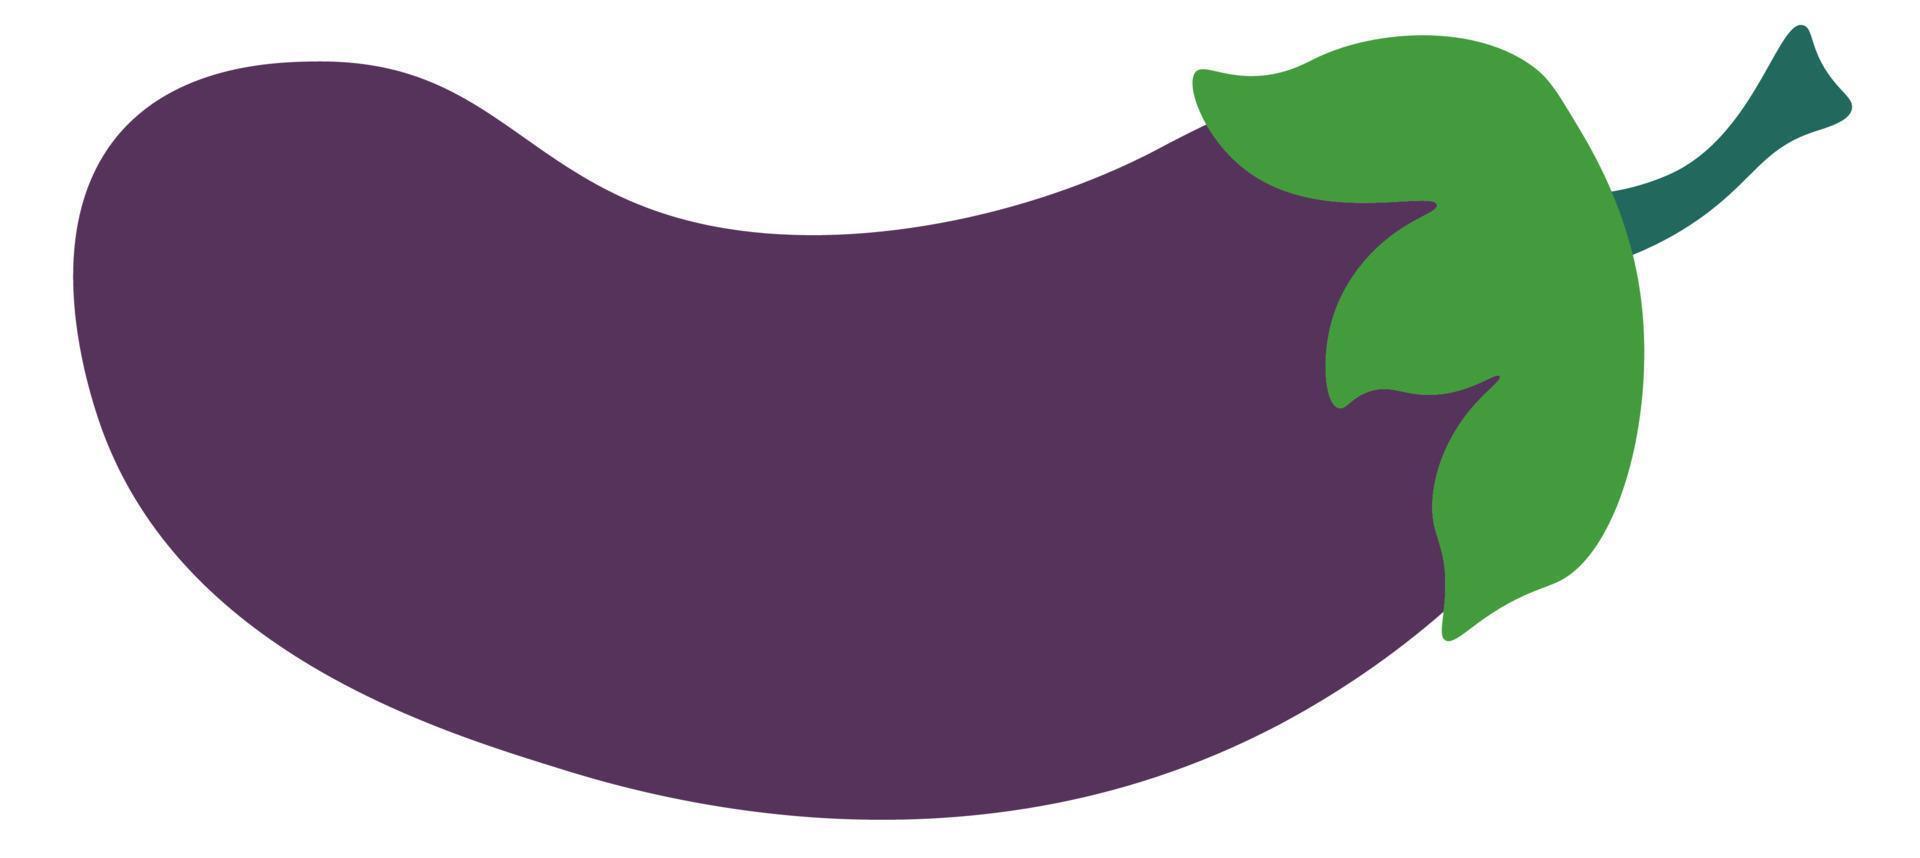 Raw aubergine vegetable, ripe eggplant vector